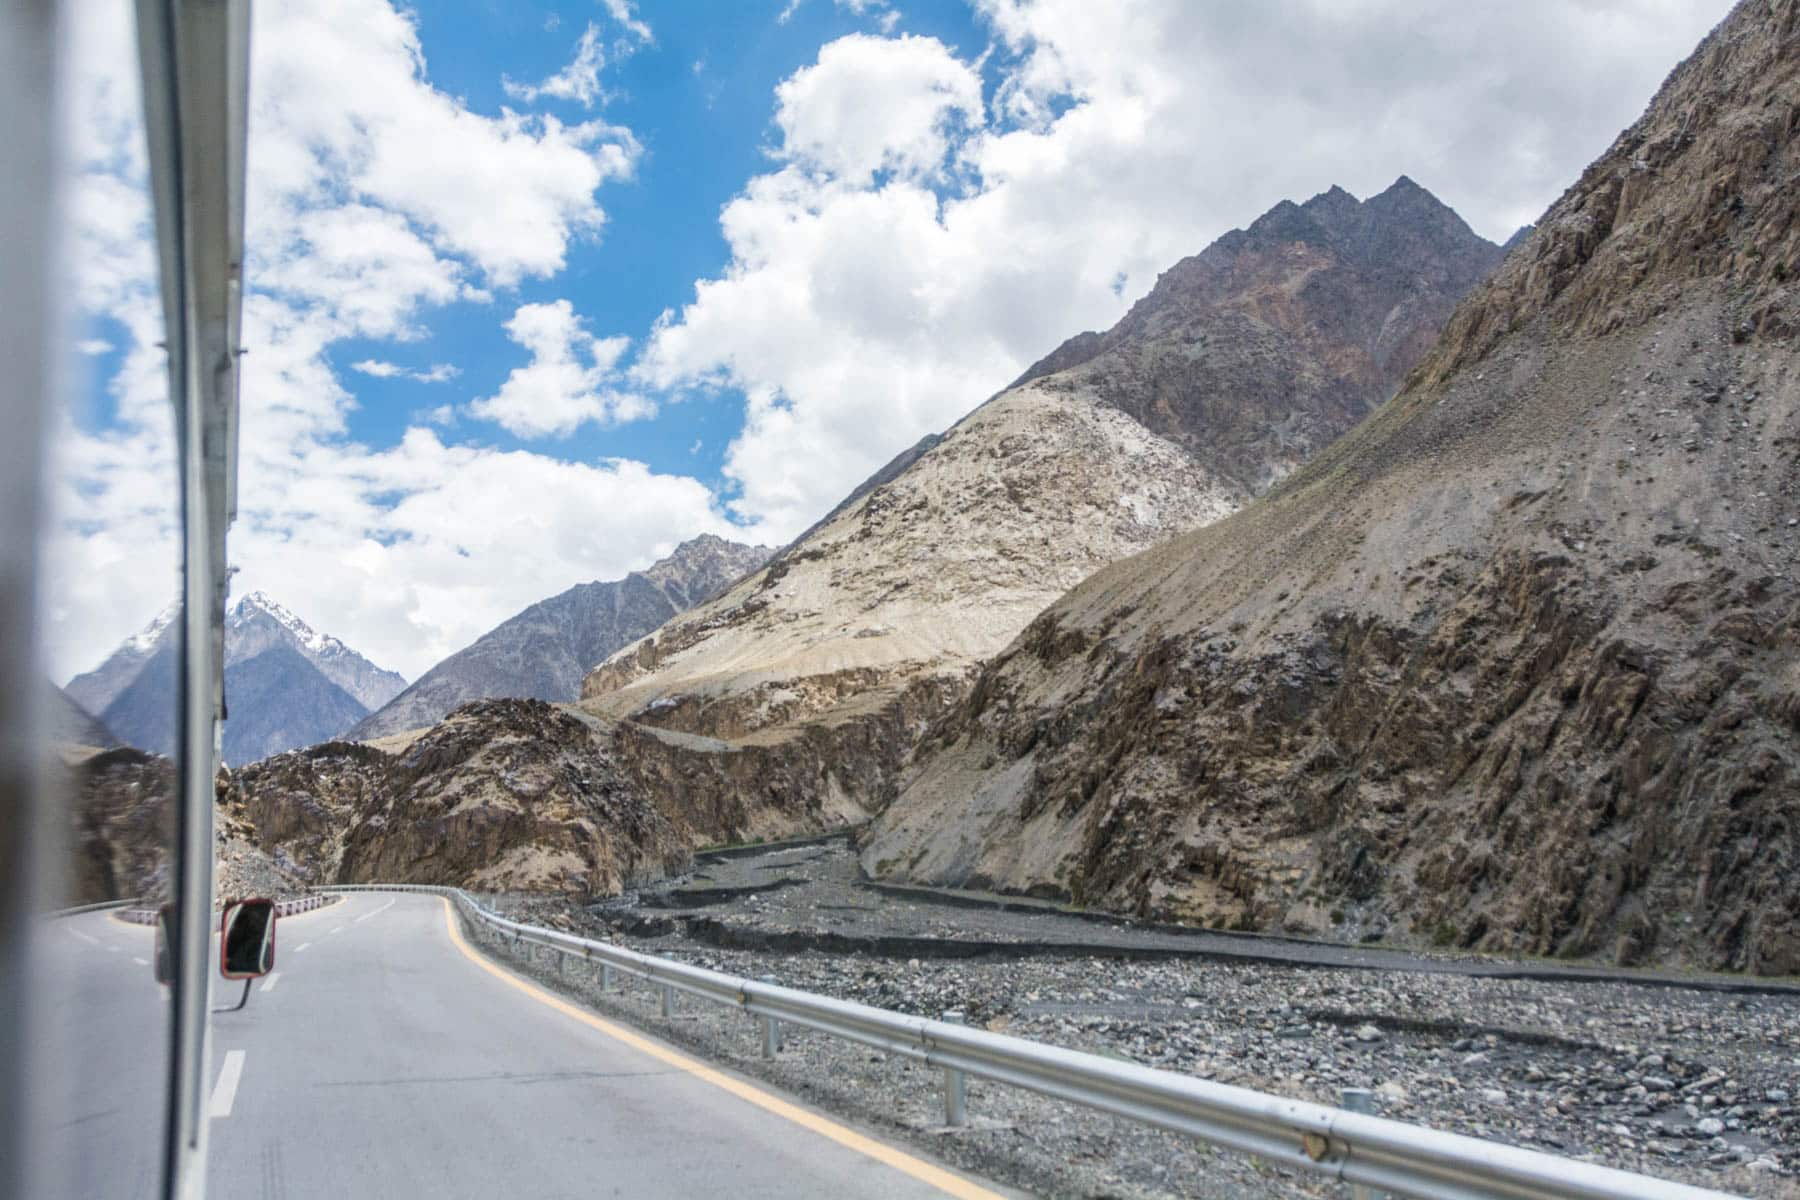 Pakistan bucket list - Bus to Khunjerab Pass near the Pakistan China border - Lost With Purpose travel blog